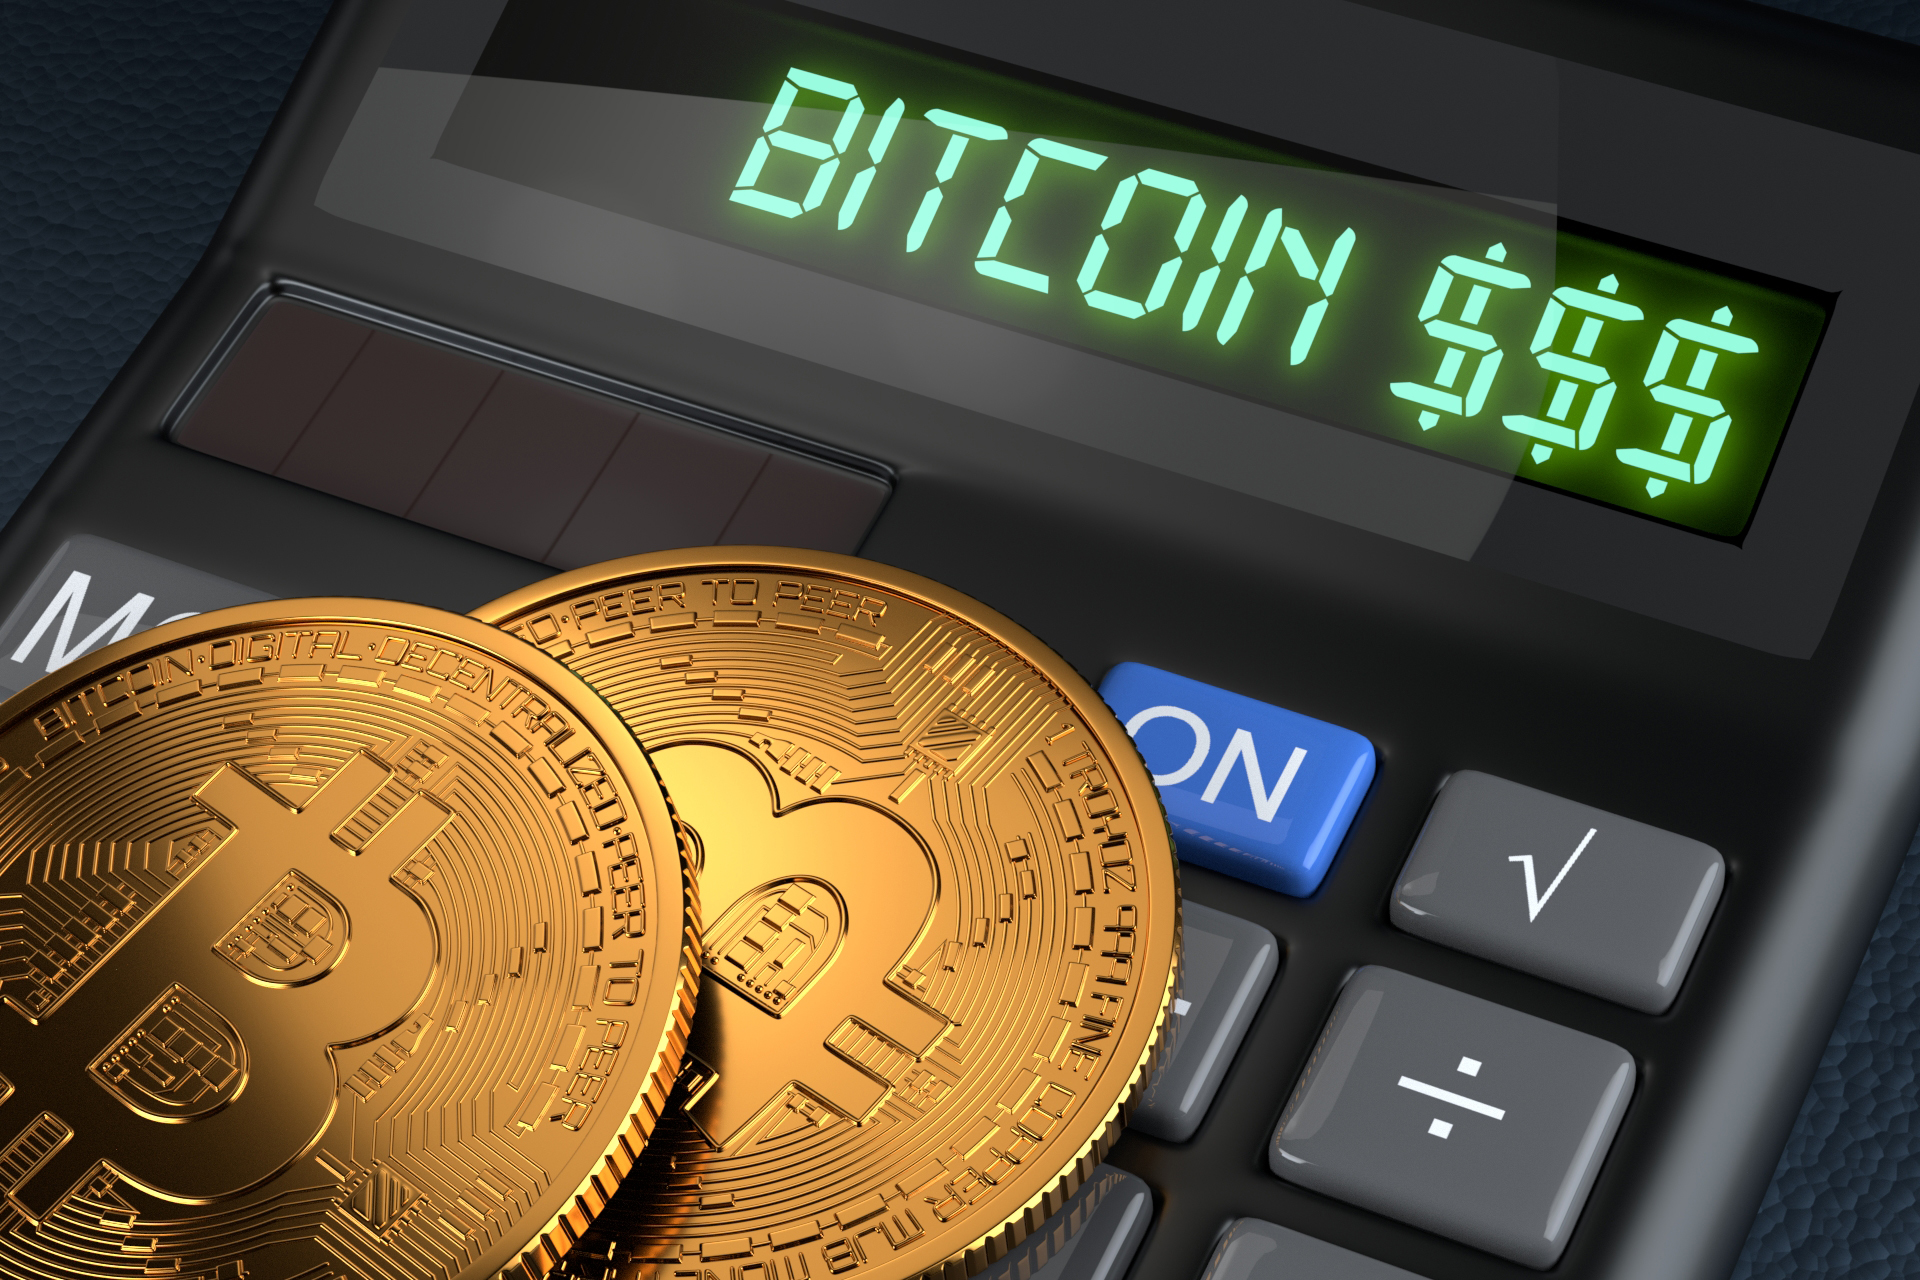 Bitcoin cash calculator free image download